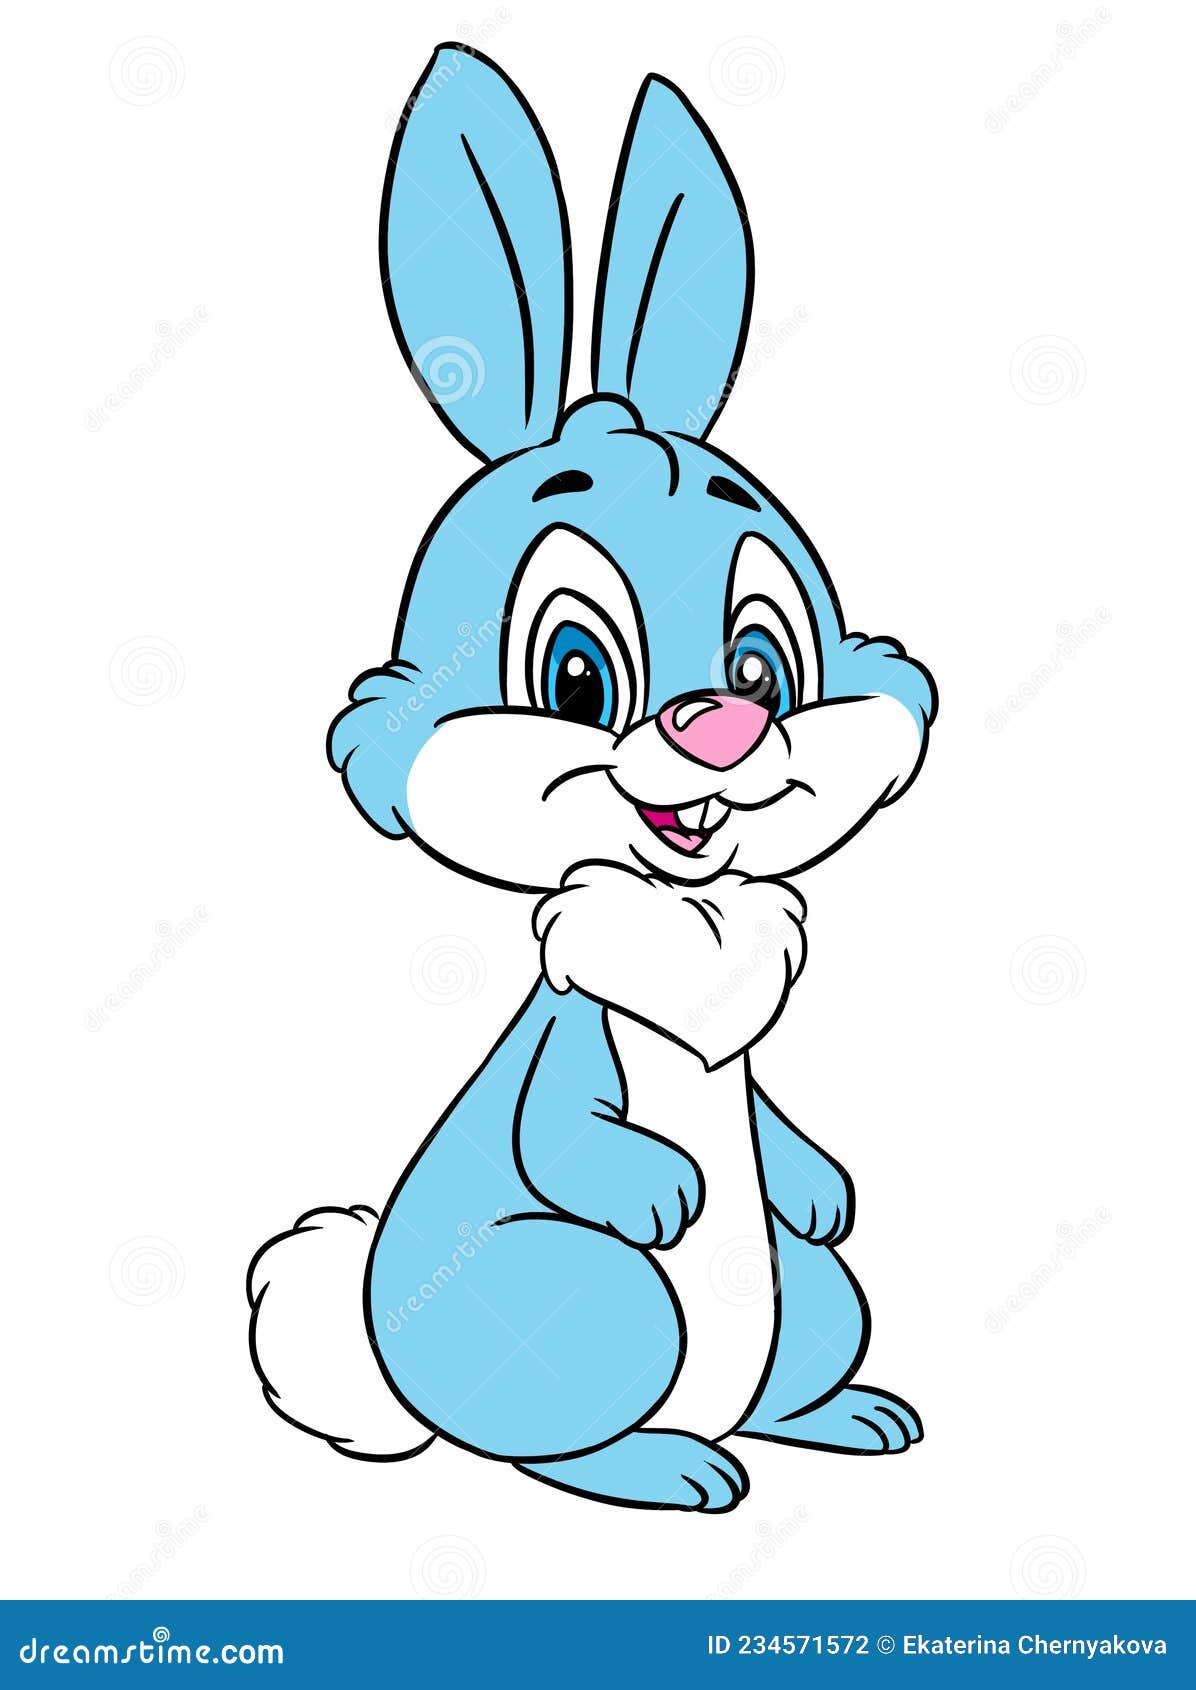 Kind Funny Rabbit Character Illustration Cartoon Stock Illustration ...